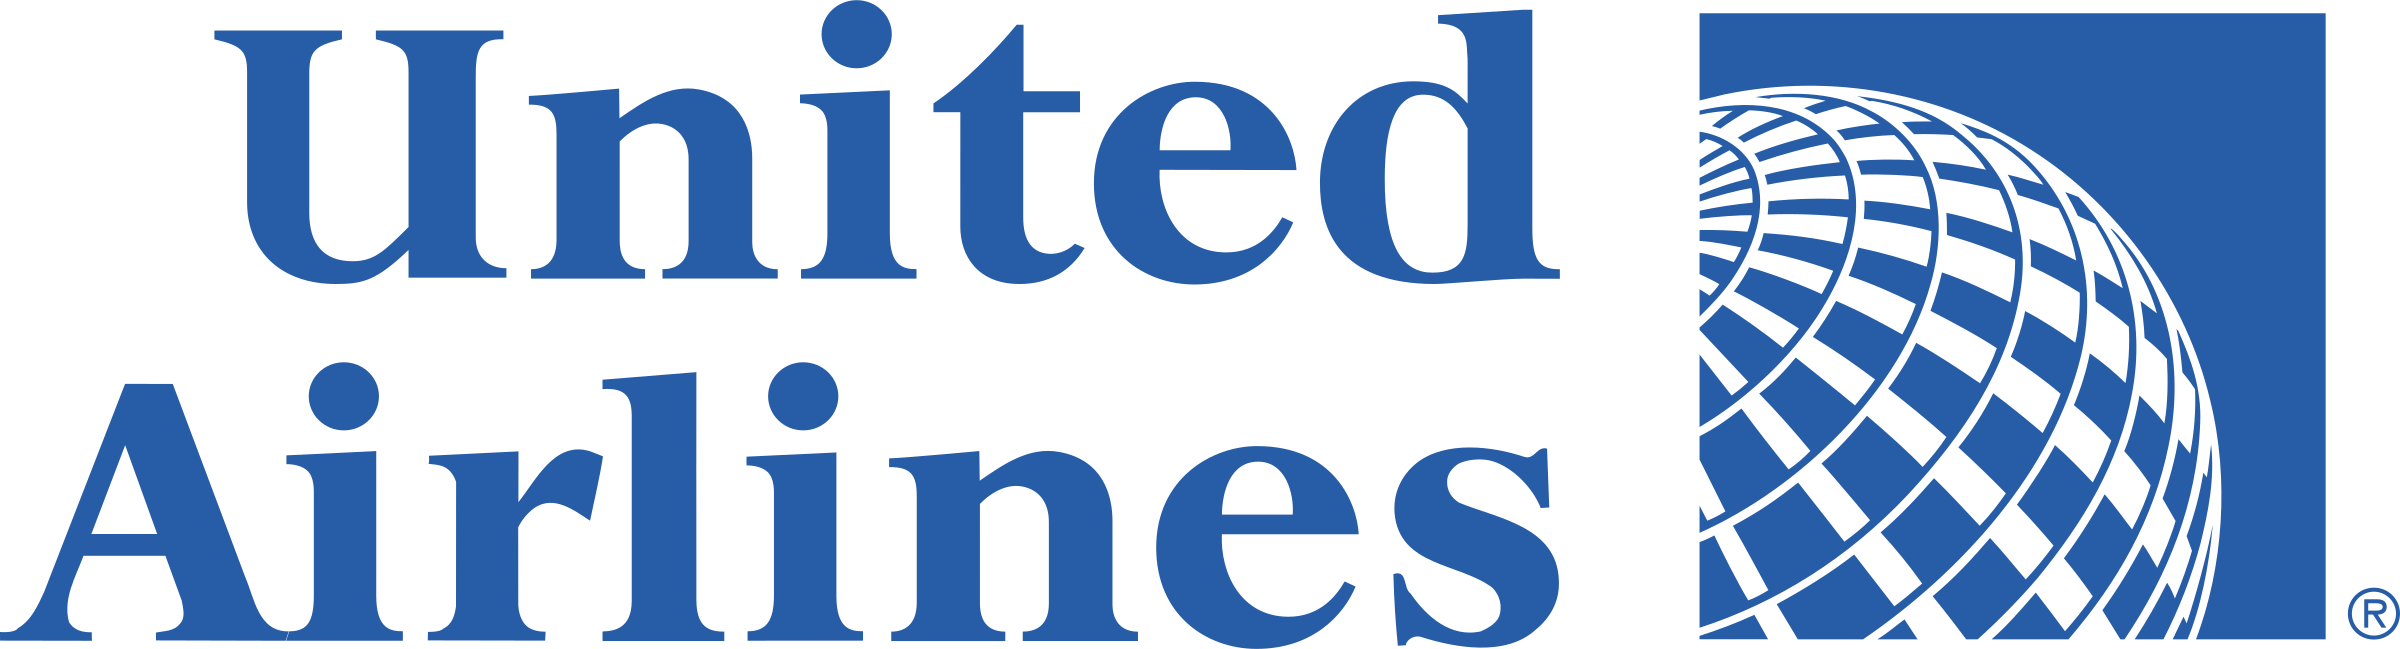 United Airlines Logo Png - United Airlines Logo 2017 Clipart (2400x649), Png Download